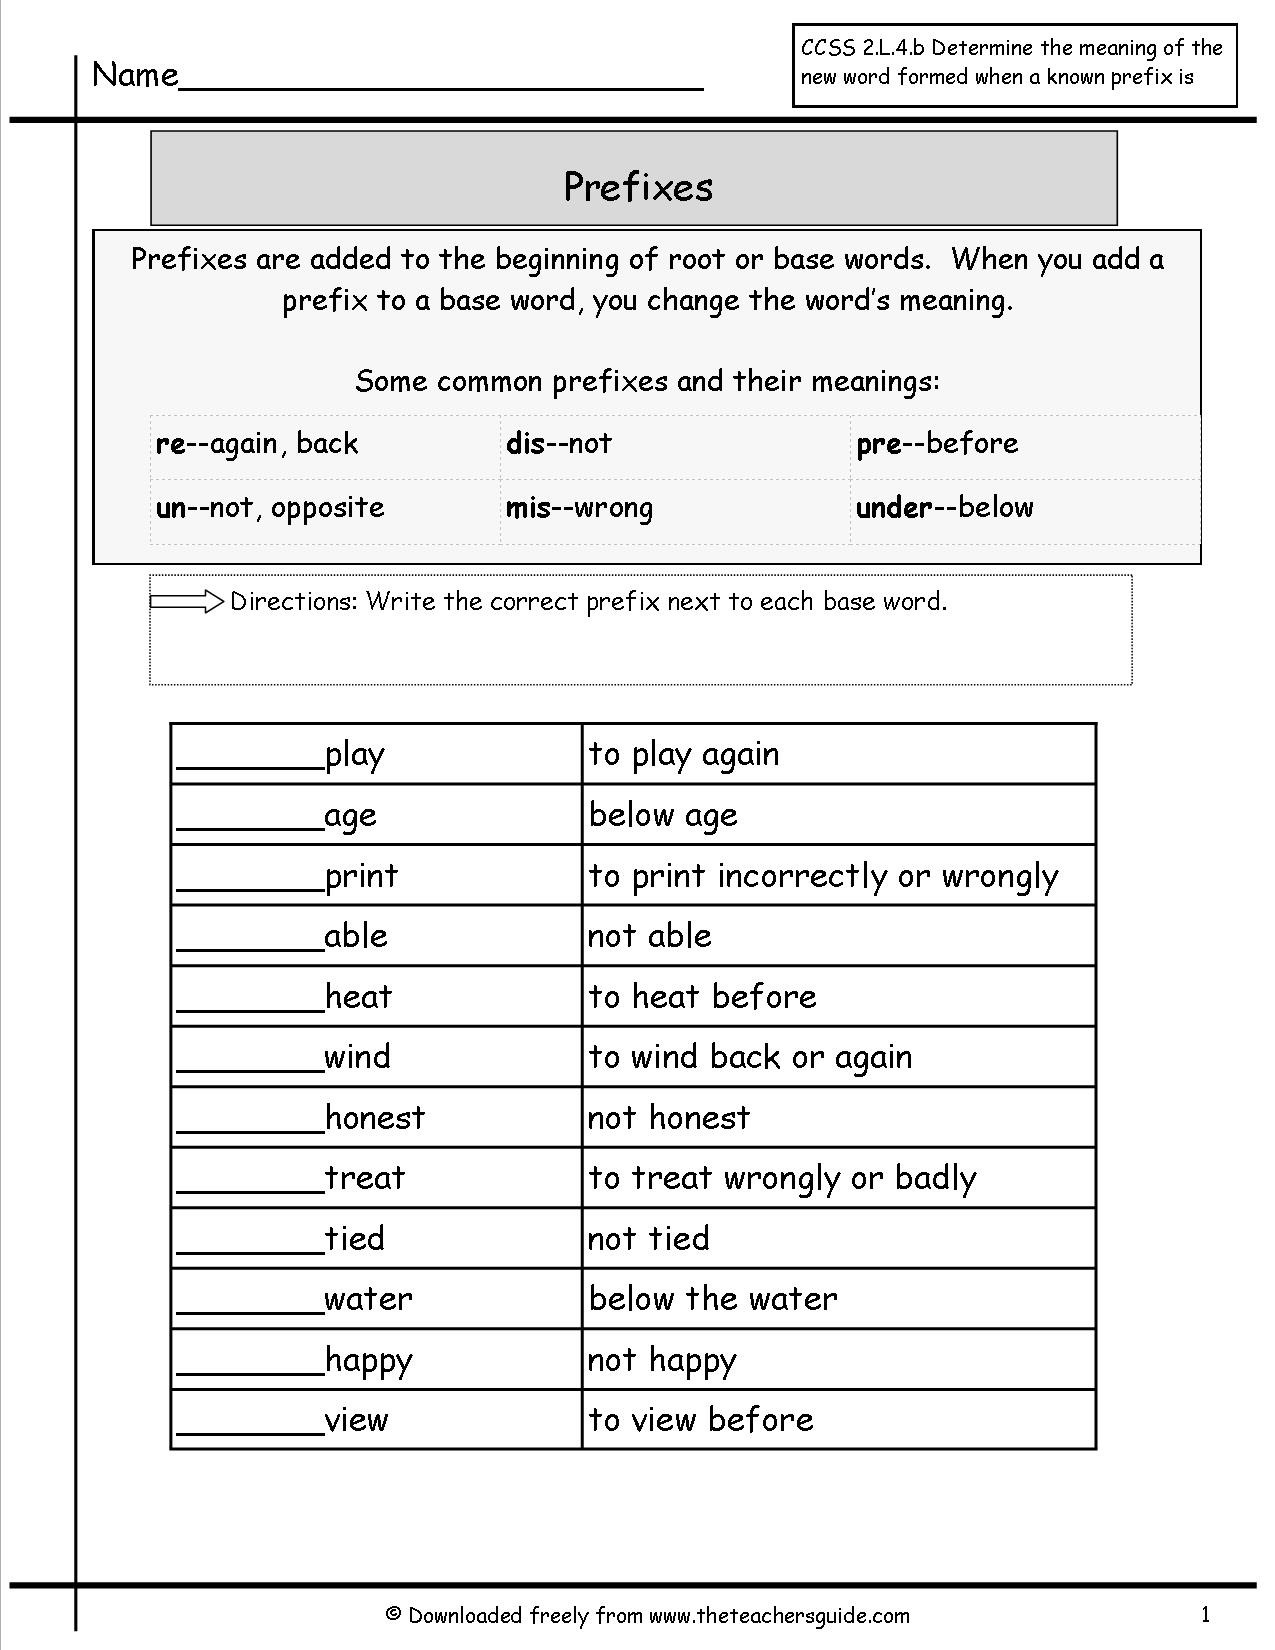 Prefixes and Suffixes Worksheet Free Prefixes and Suffixes Worksheets From the Teacher Guide